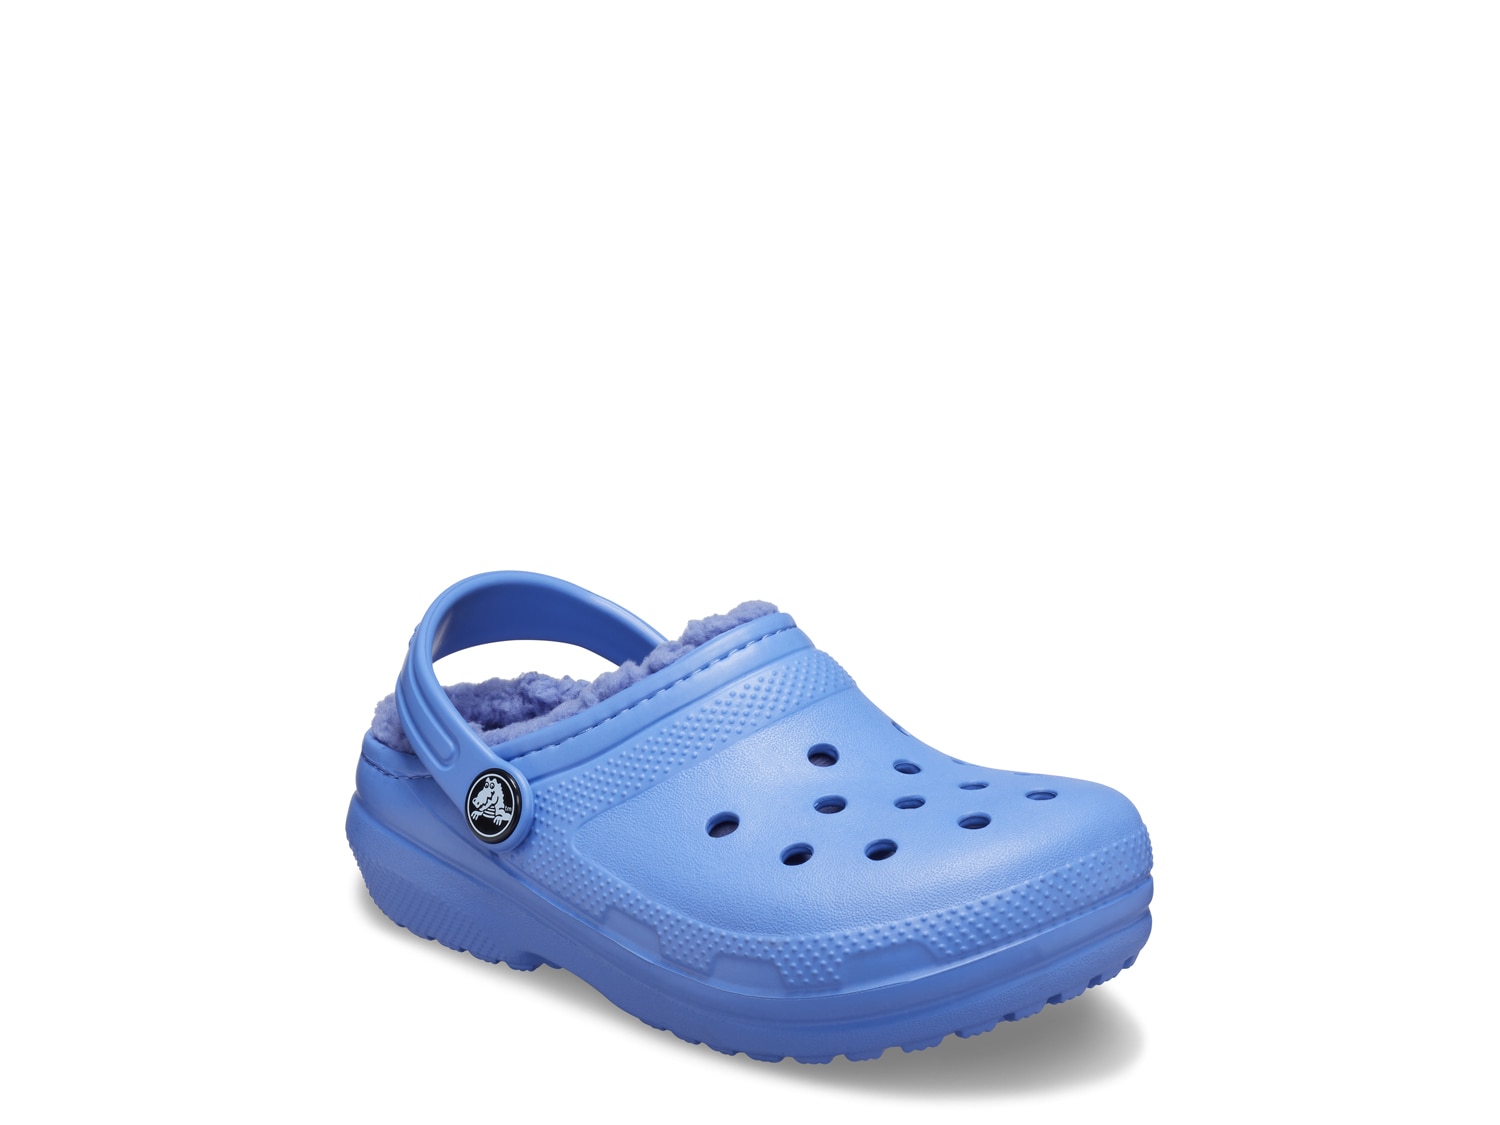 where to buy kids crocs near me